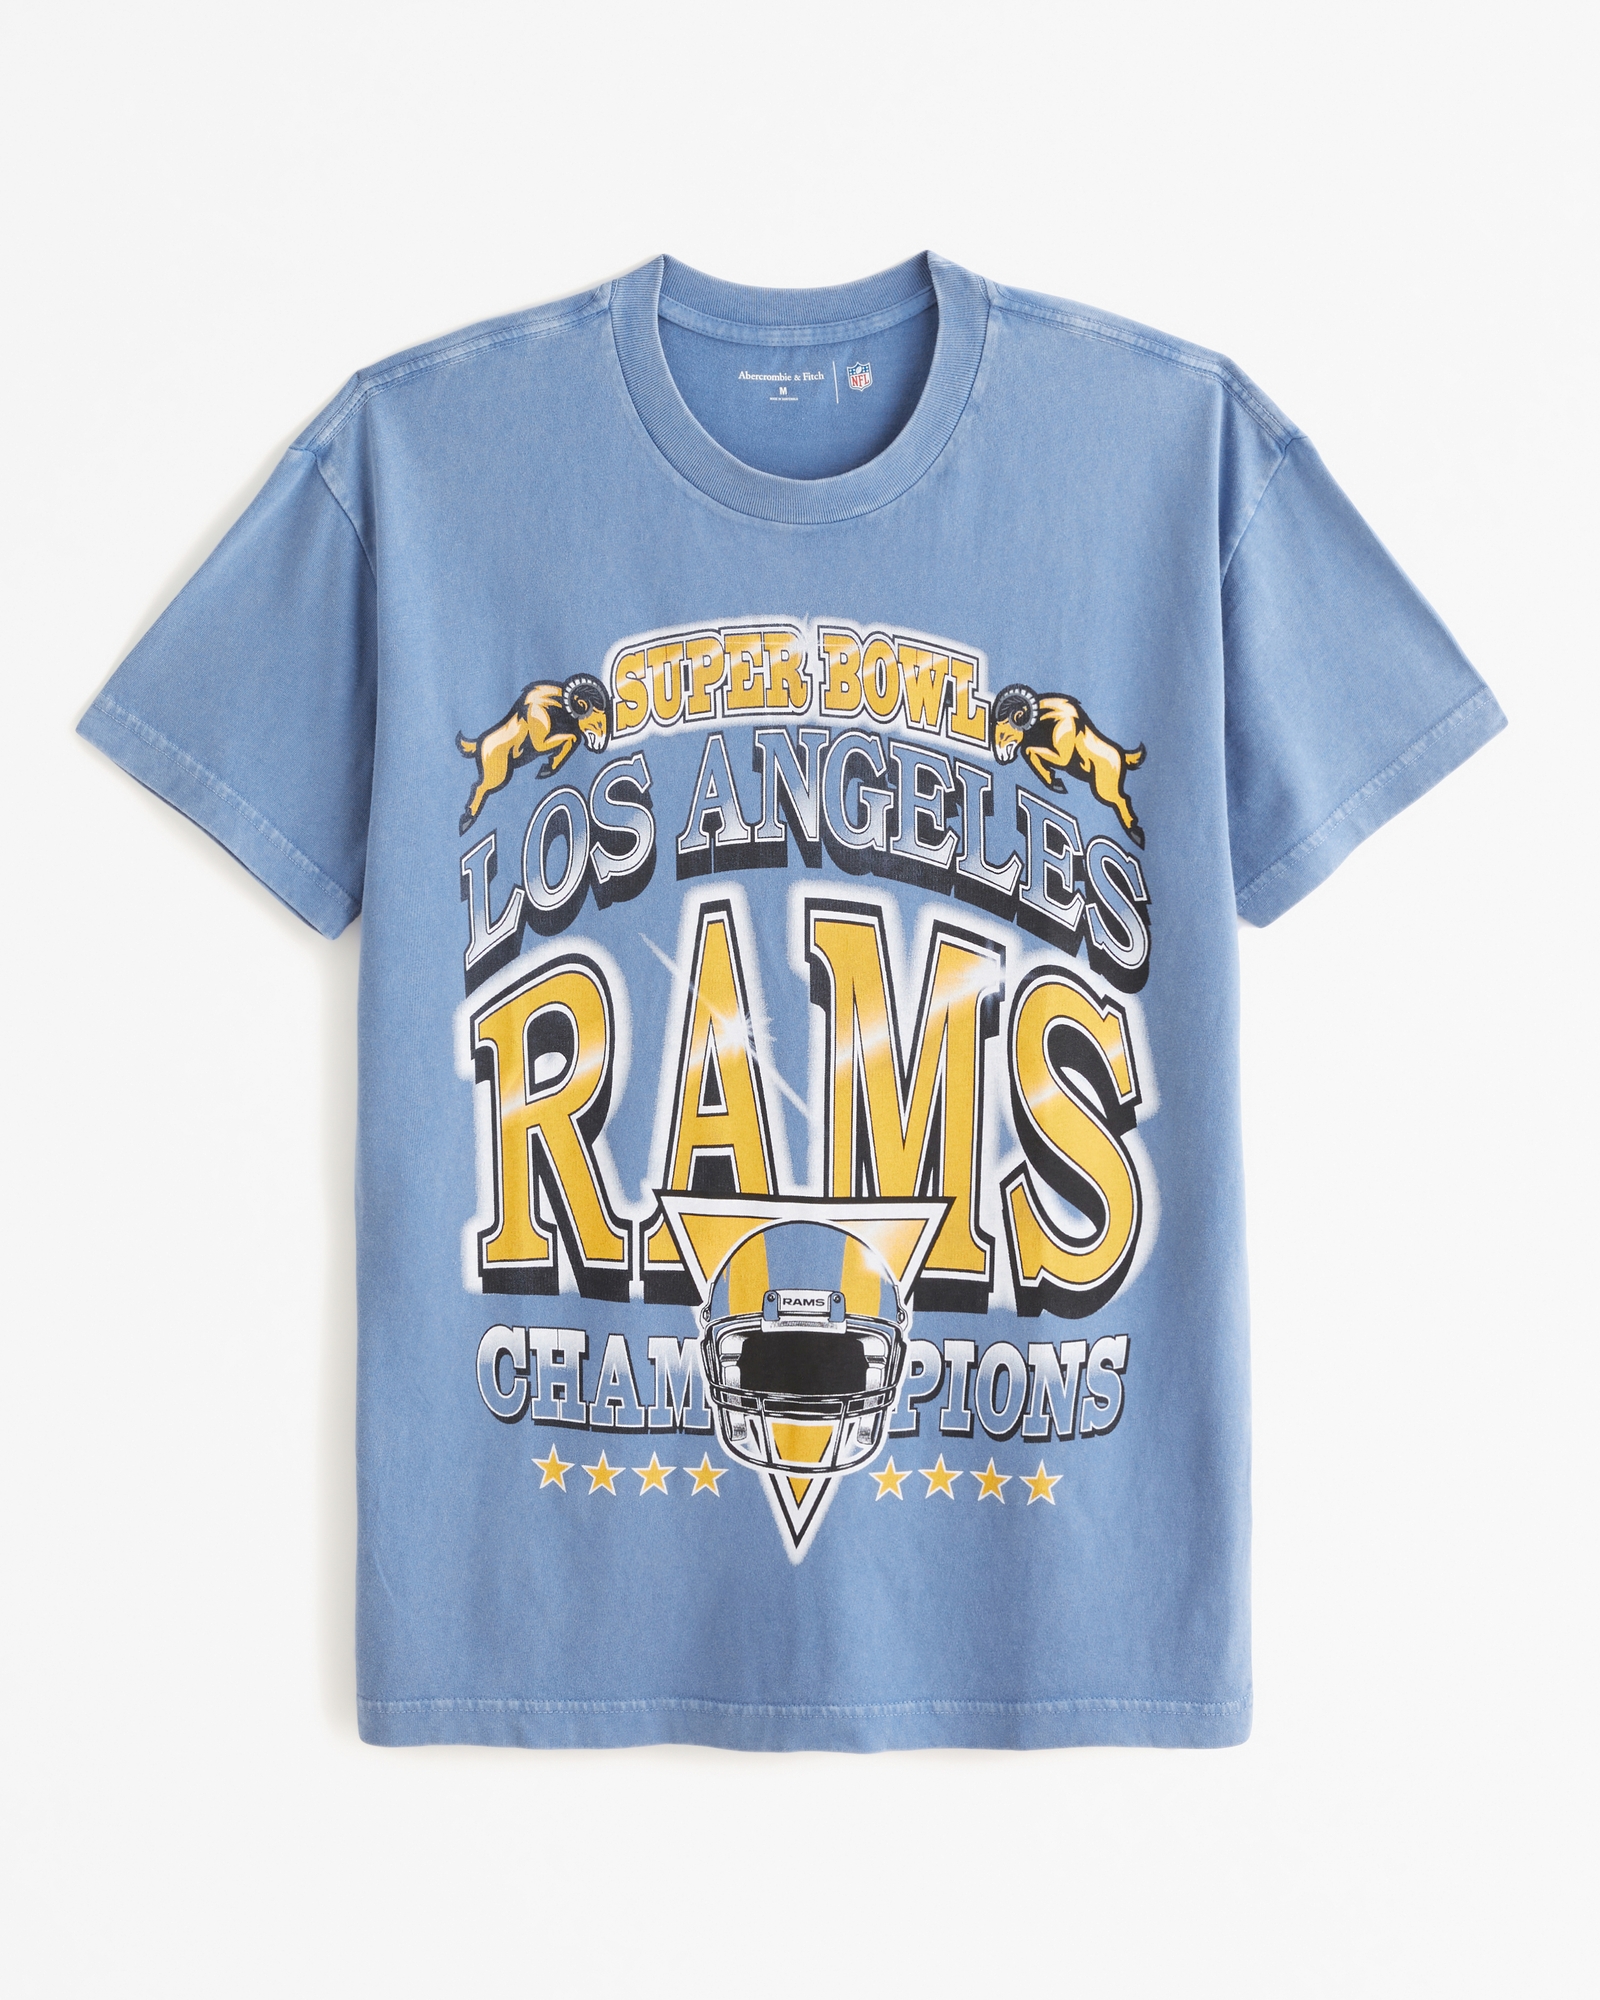 Los Angeles Rams Shirt - Retro California Football Apparel Men Women Unisex  Shirt